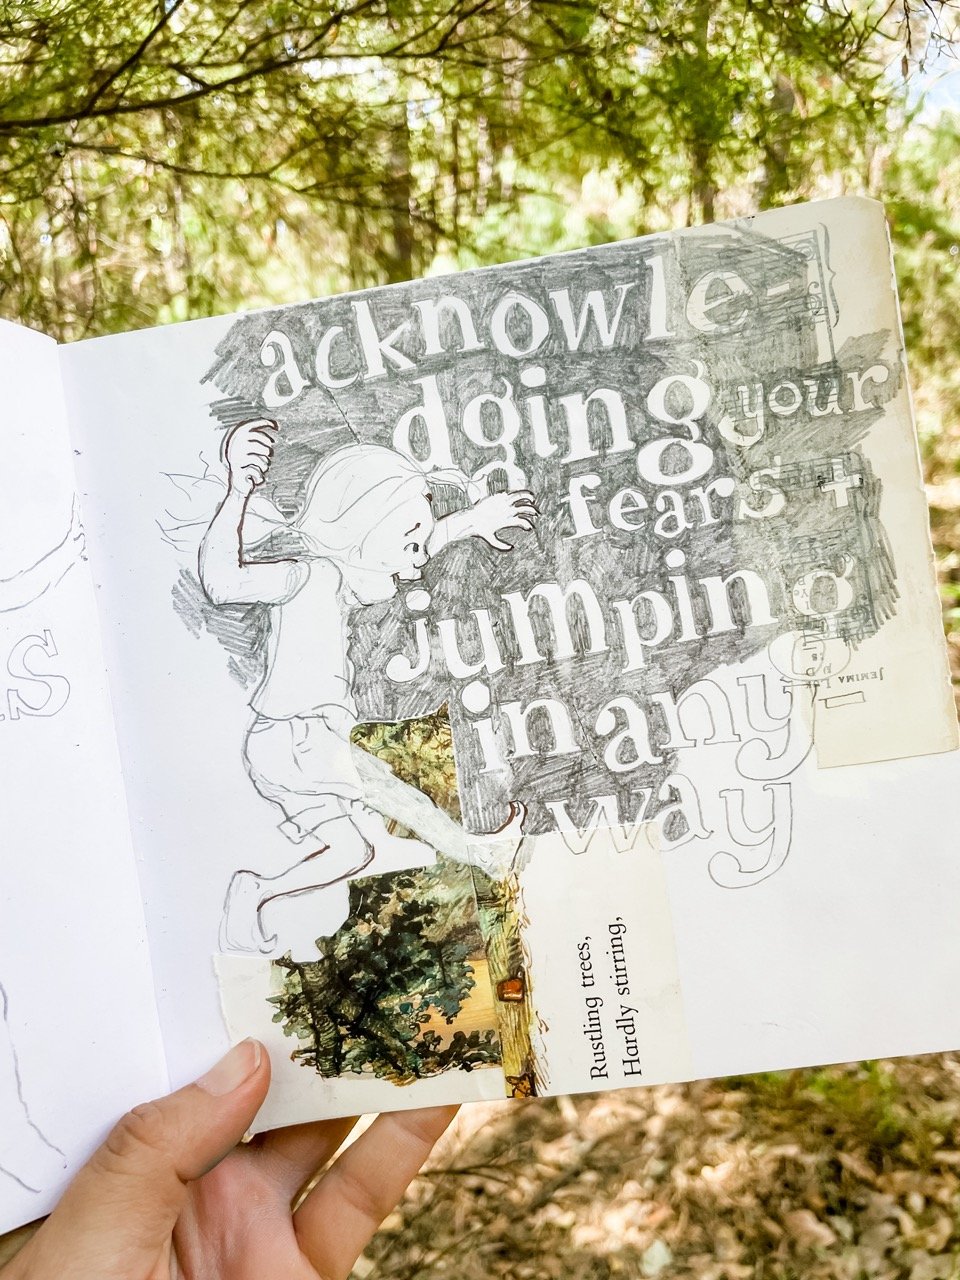 A Holiday Sketchbook Kit — Ruth de Vos: Art